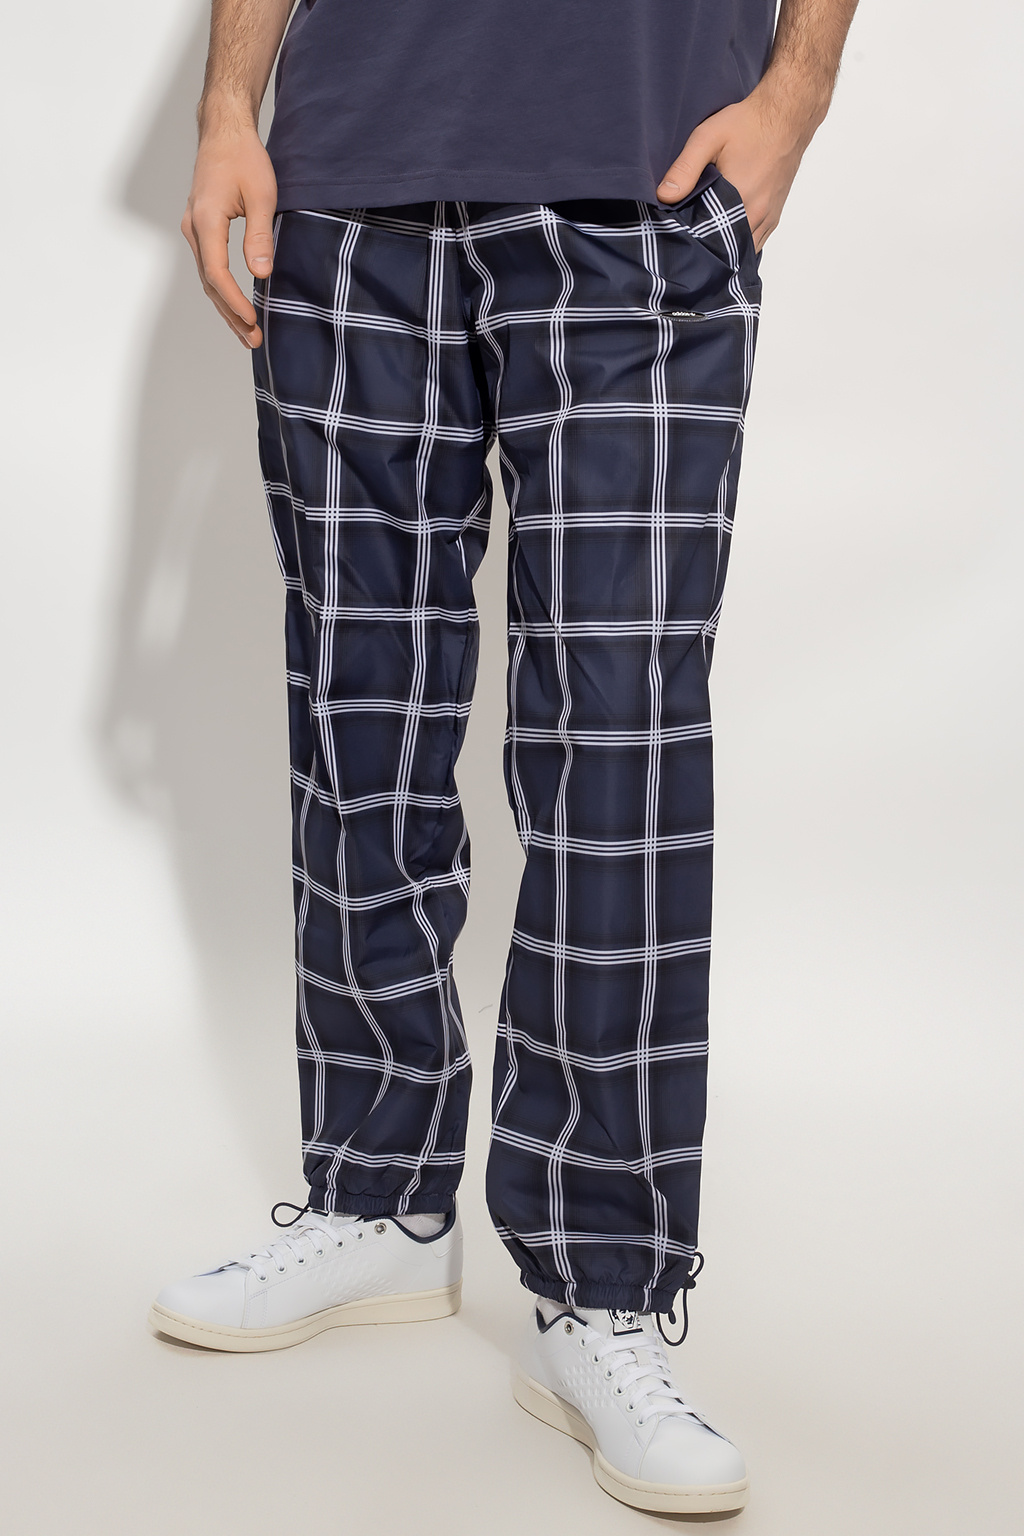 Adidas Originals Europa Satin Track Pants Navy Blue Sweatpants Size M | eBay